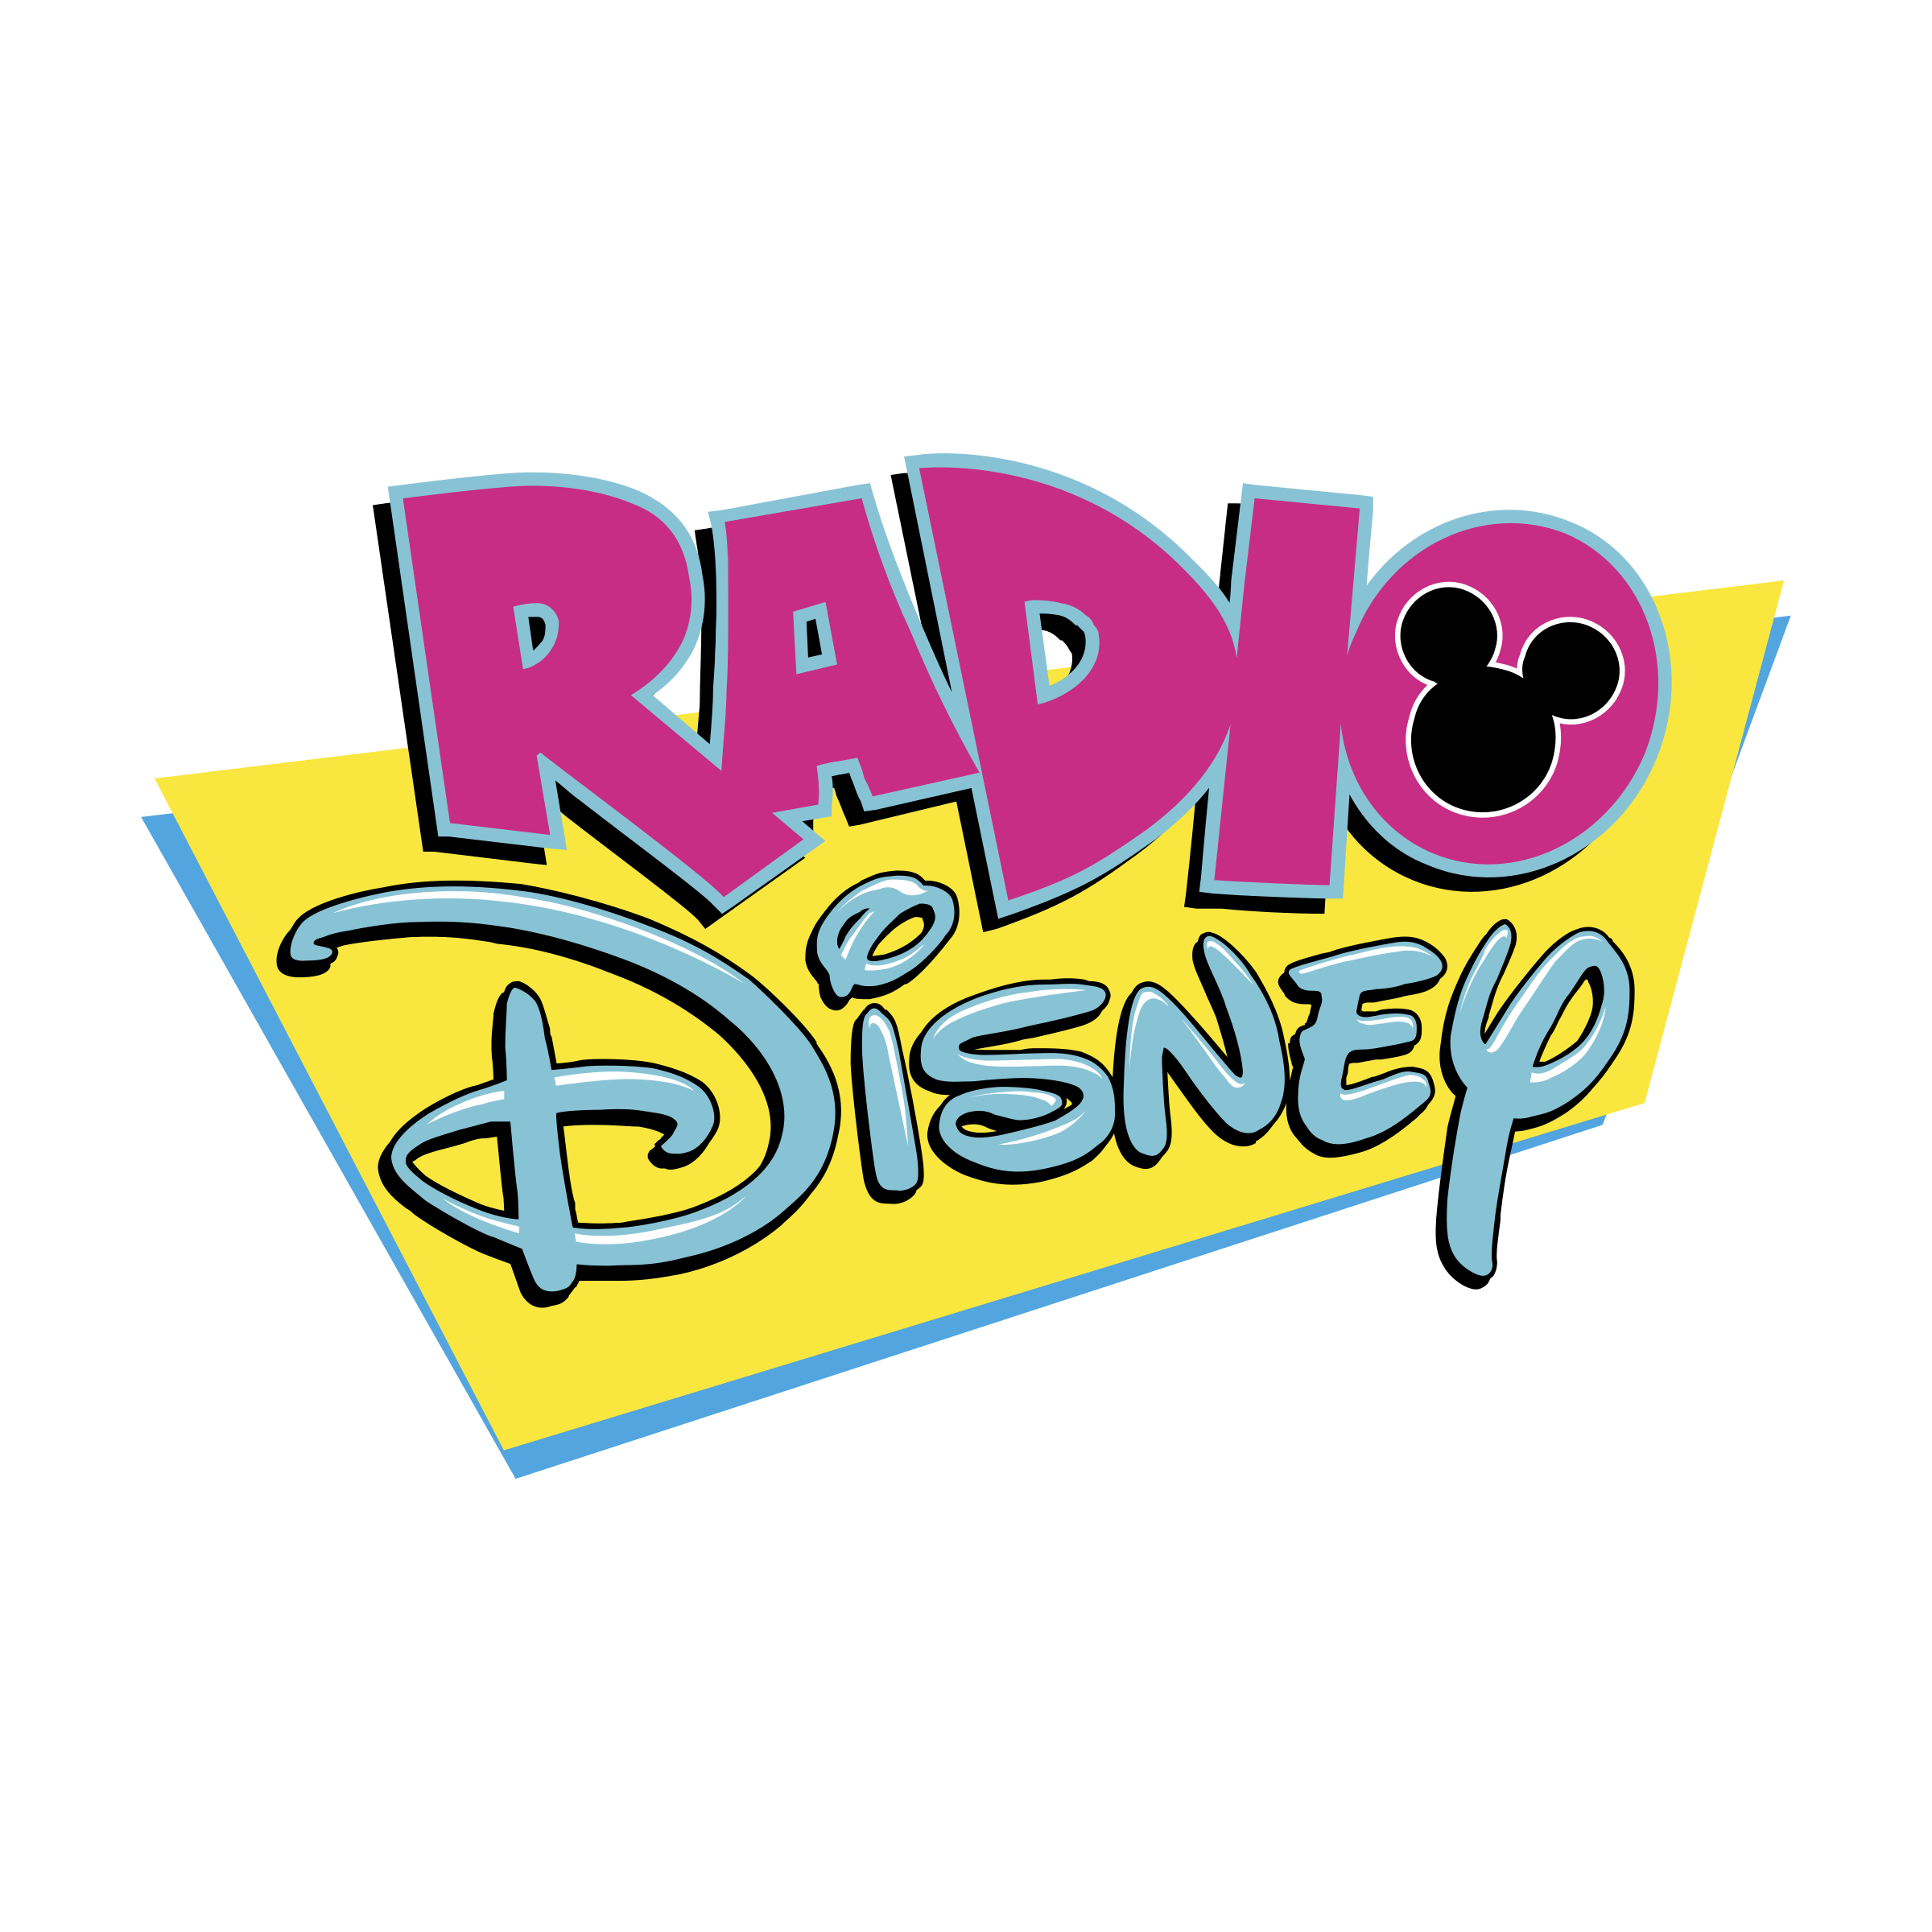 Radio Disney Logo - Radio Disney Logo PNG Transparent & SVG Vector - Freebie Supply